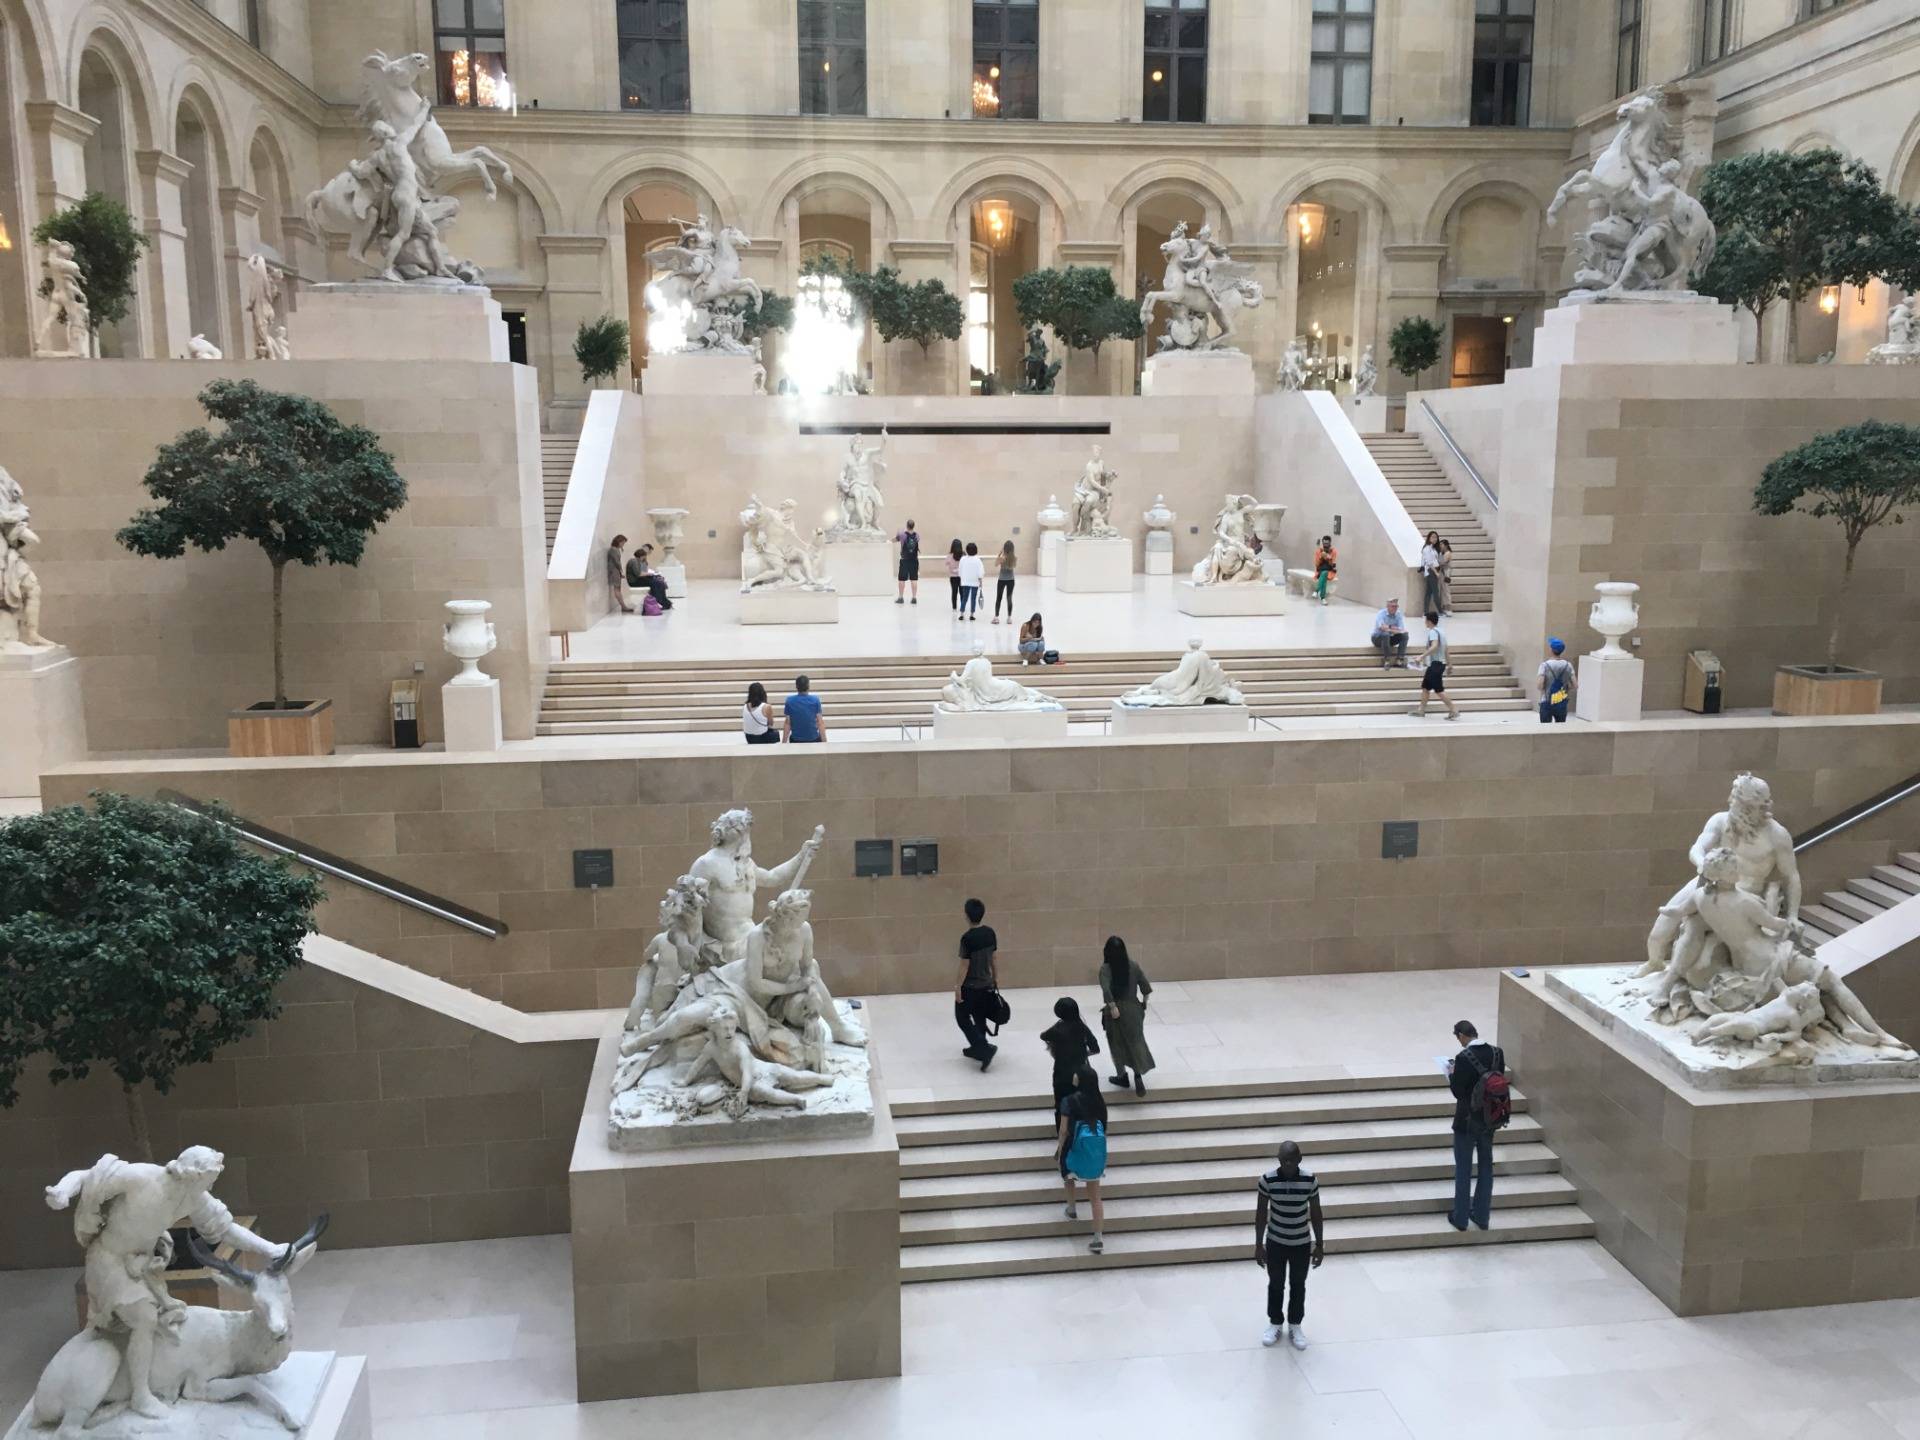 Glimpse into Louvre